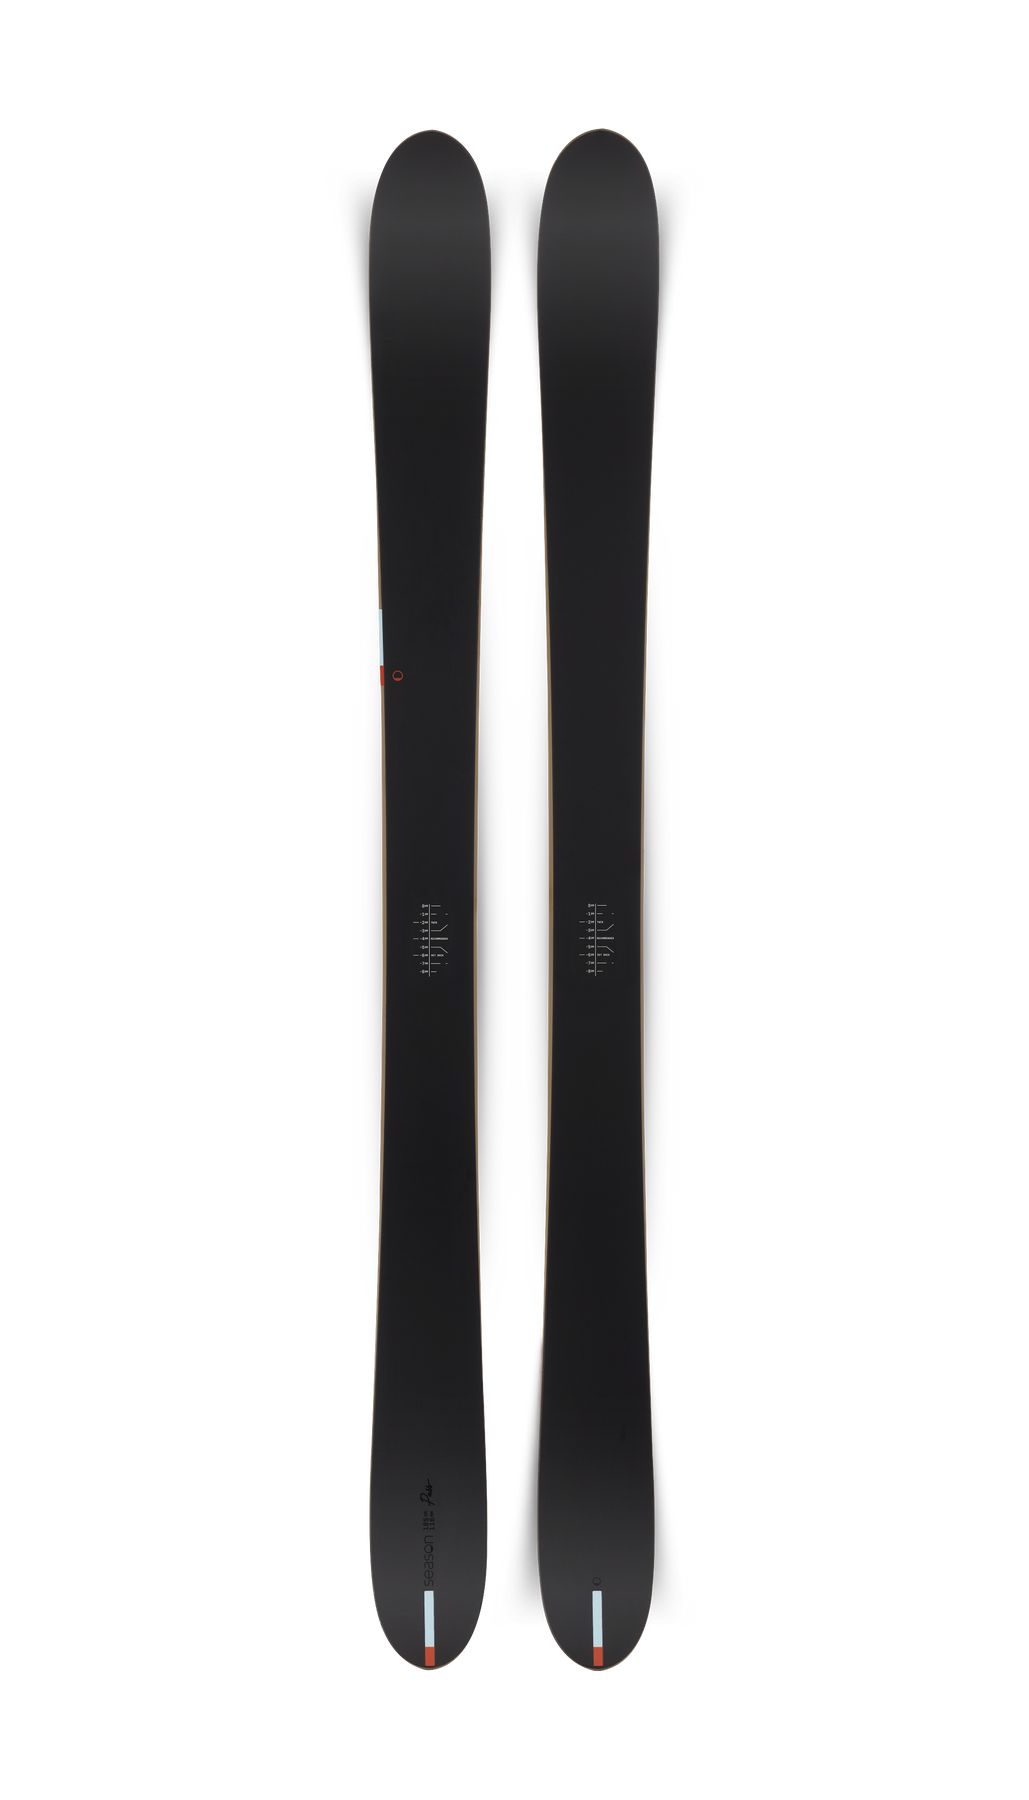 season pass skis season eqpt. a new model of ski shaped for powder